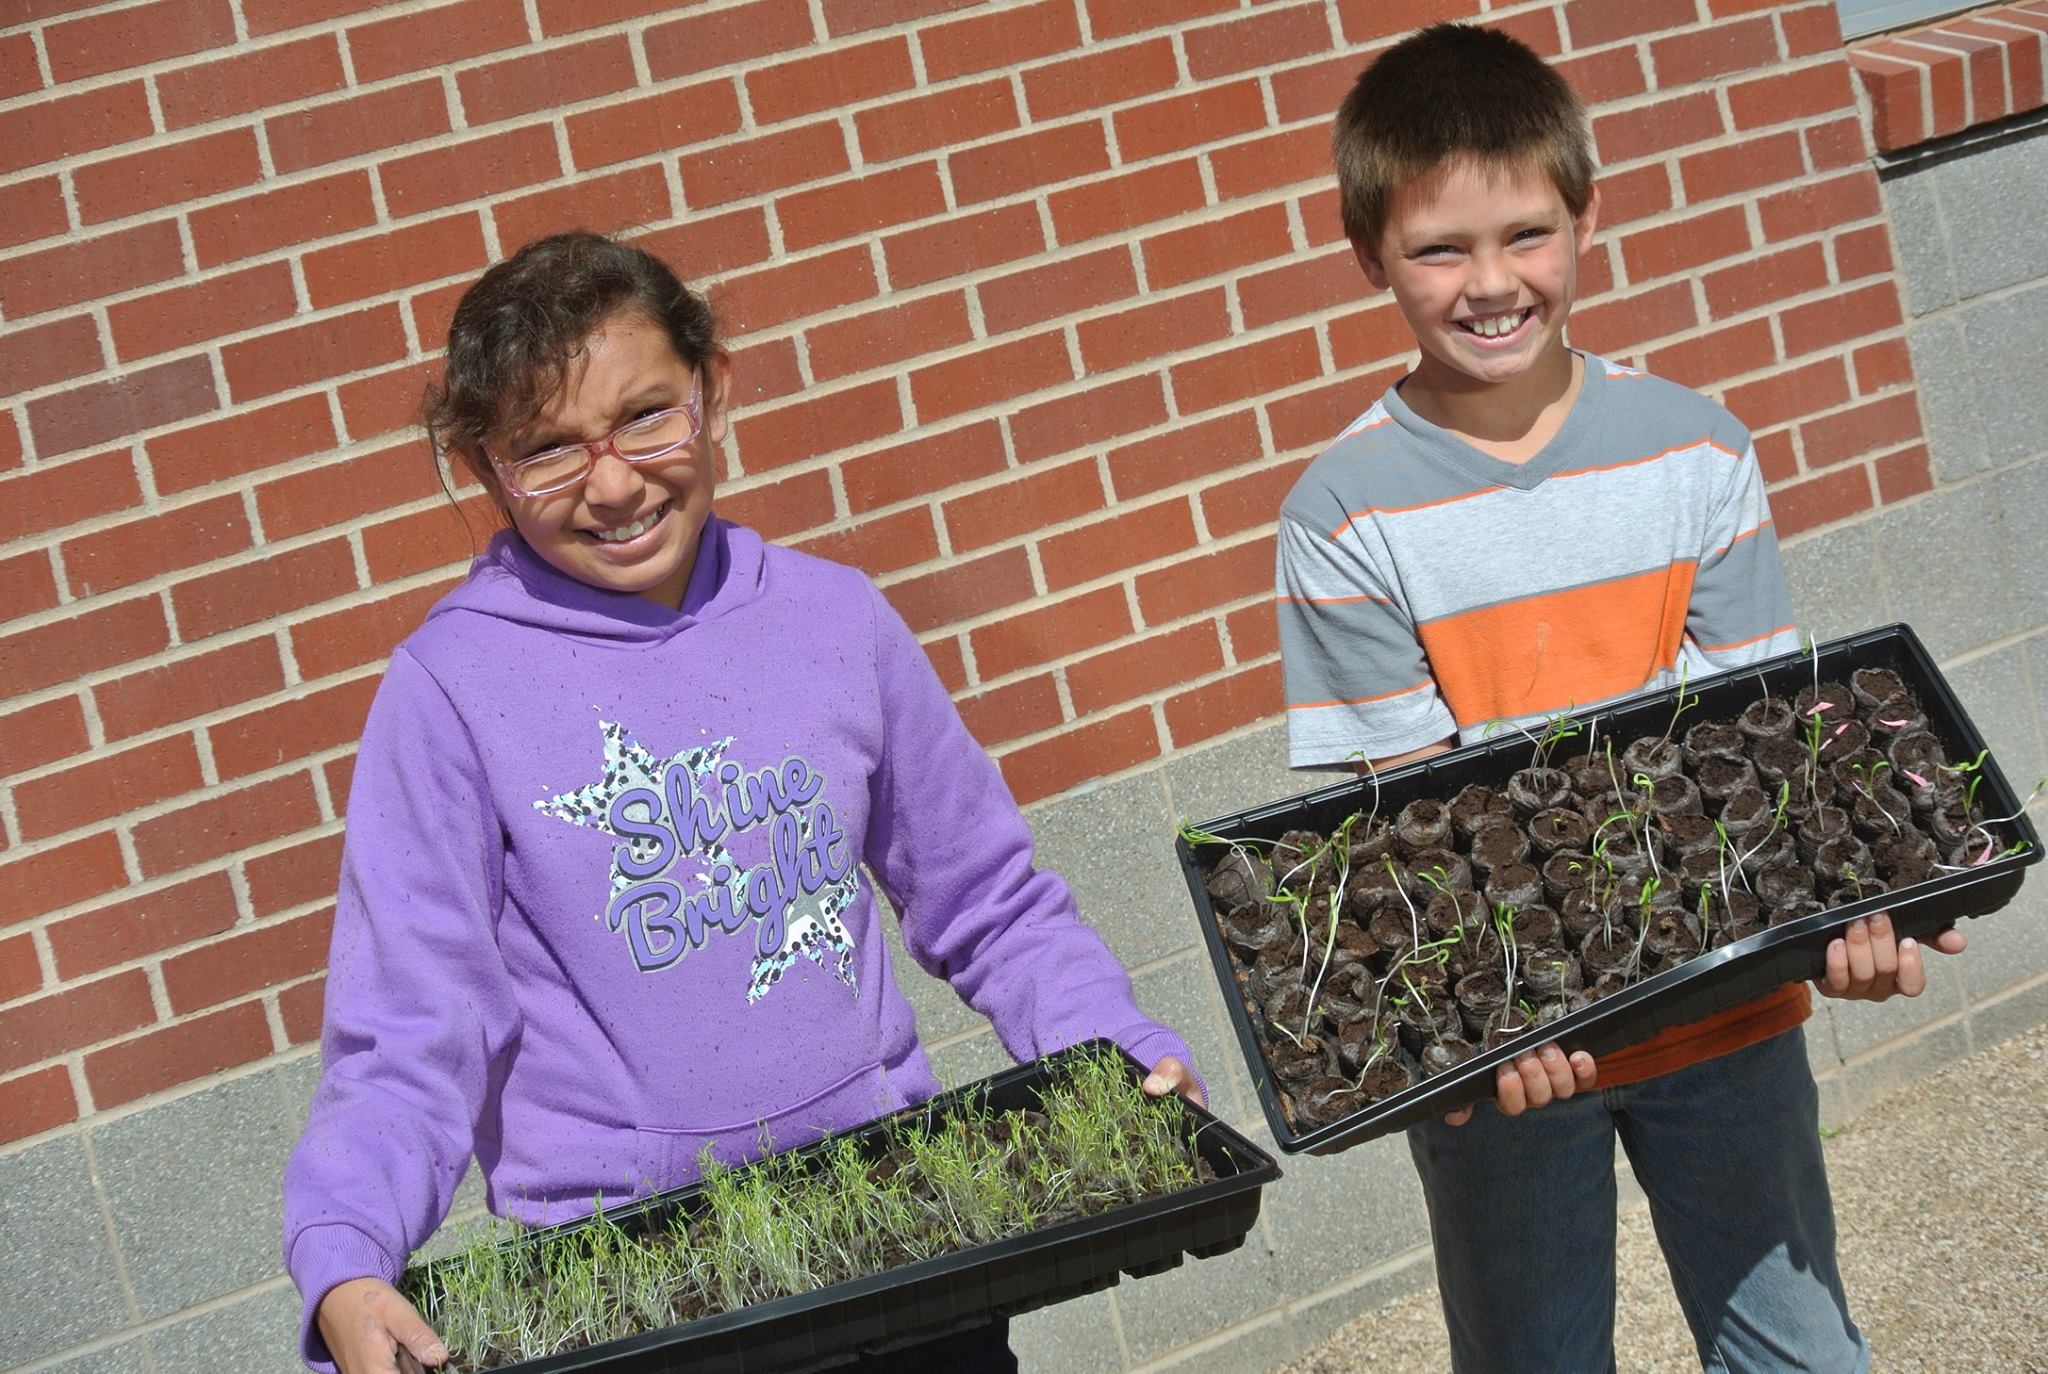 Students holding seedlings